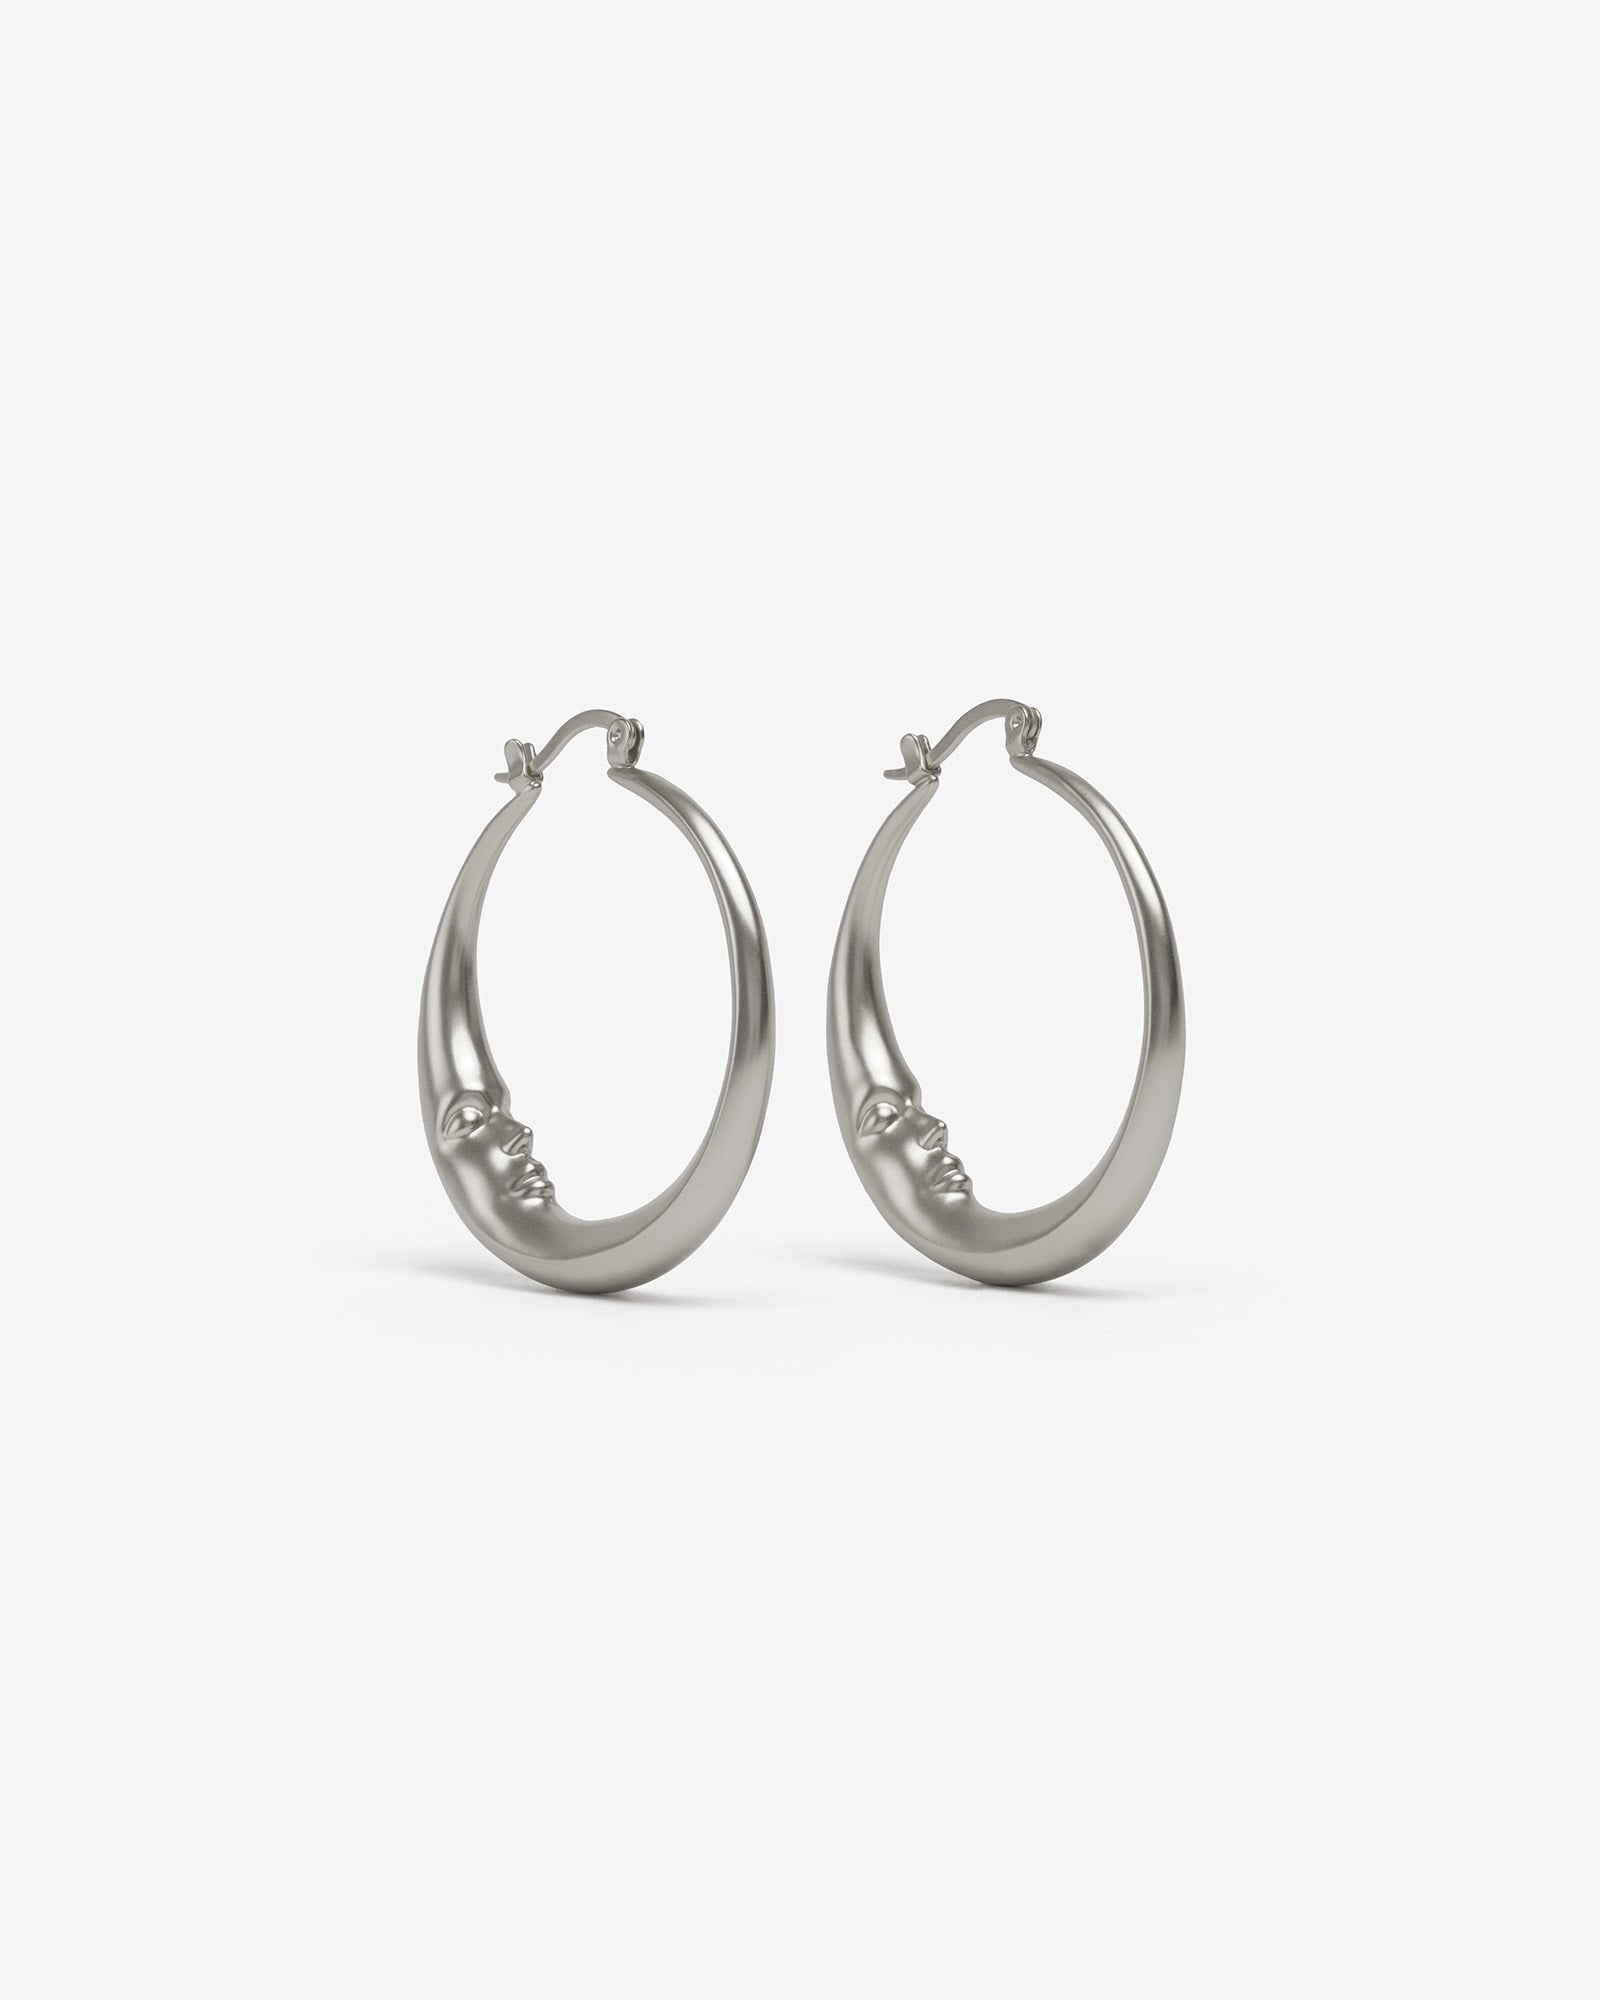 Lune Moon Earrings (Large) - Earrings - Ask and Embla